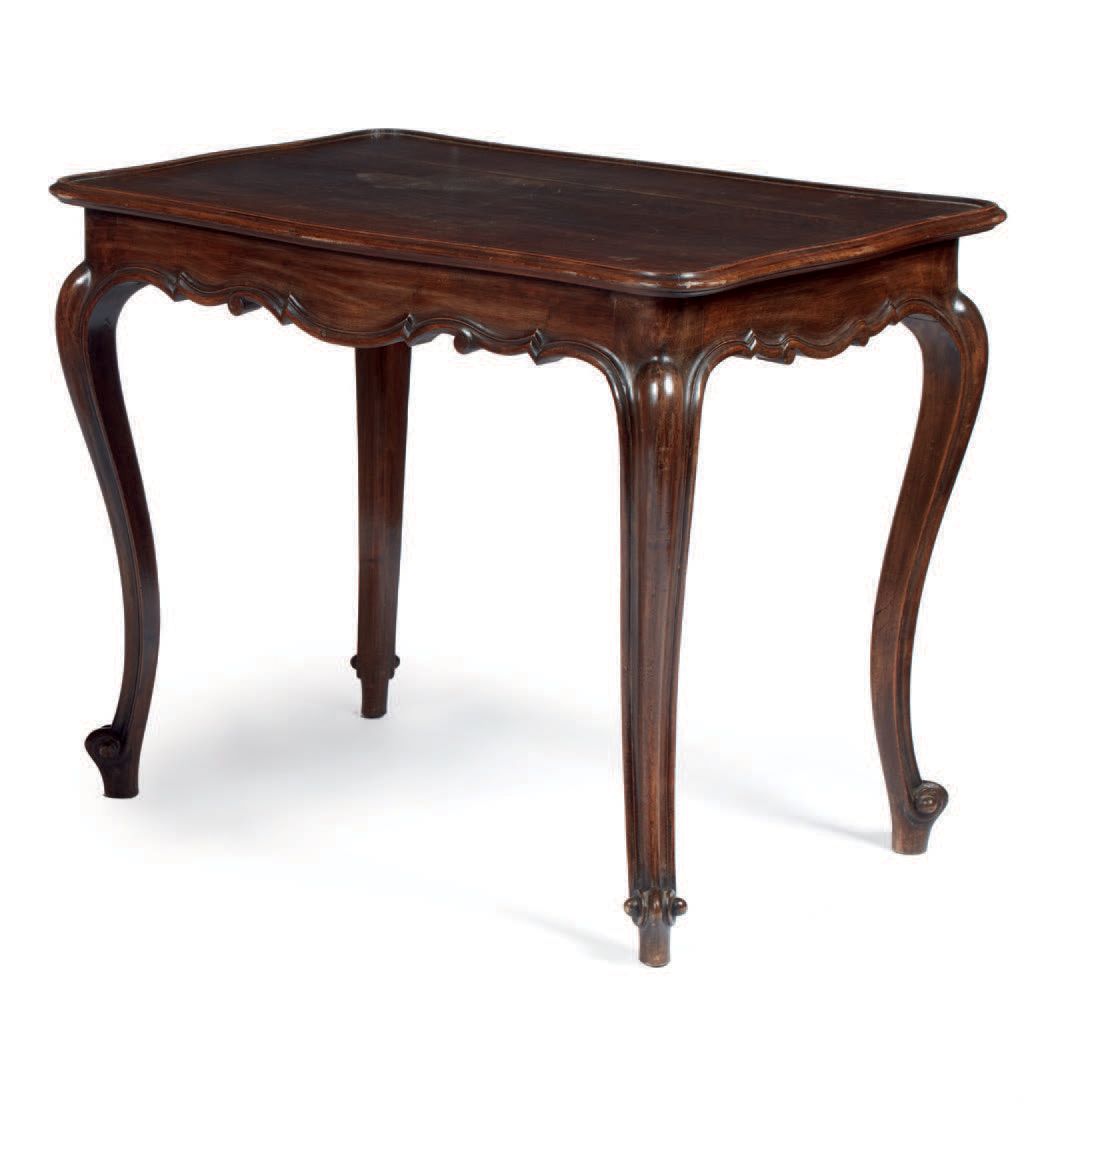 Null Walnut table, rectangular top and slightly wavy legs, 19th century (wear)
T&hellip;